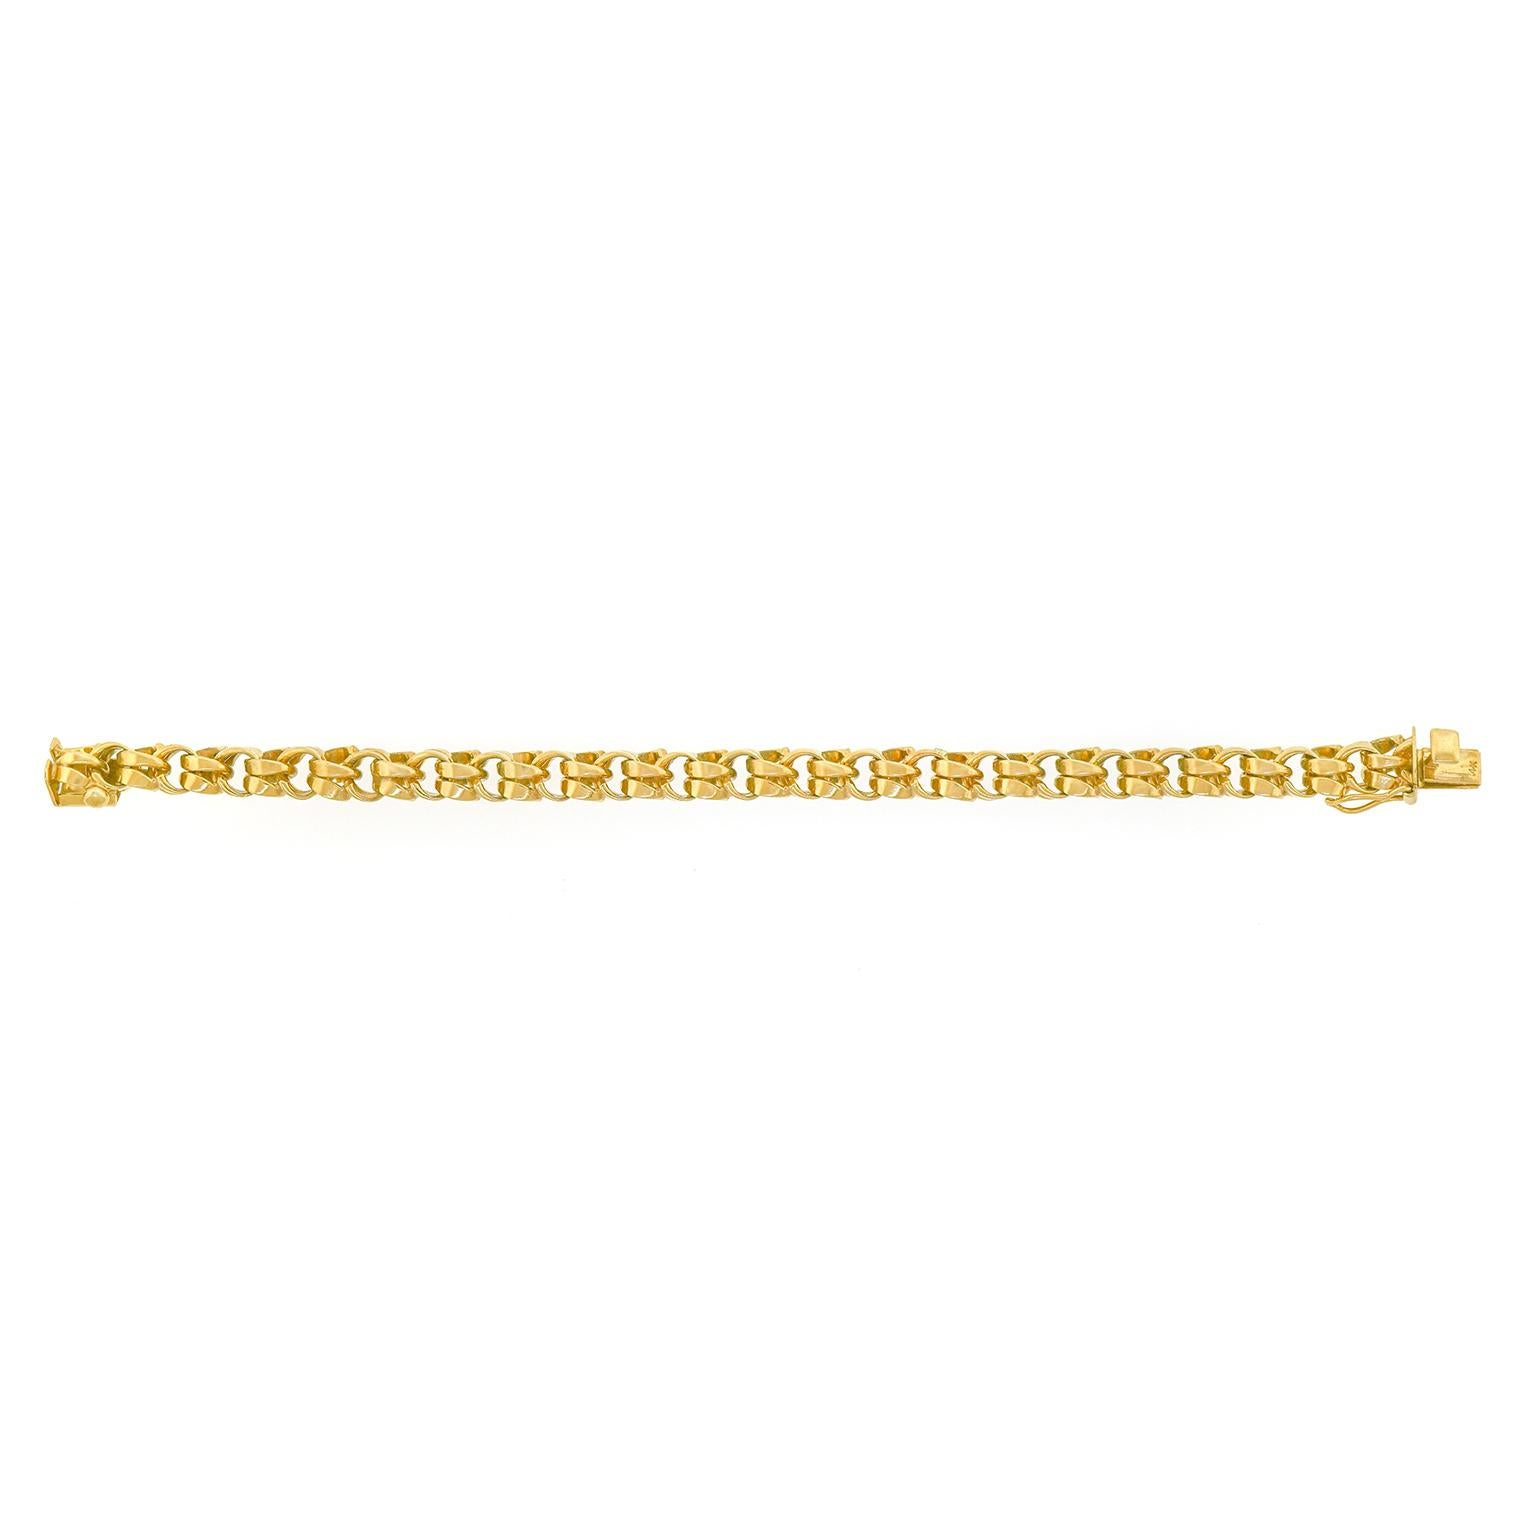 Fifties Everyday American Gold Bracelet 2